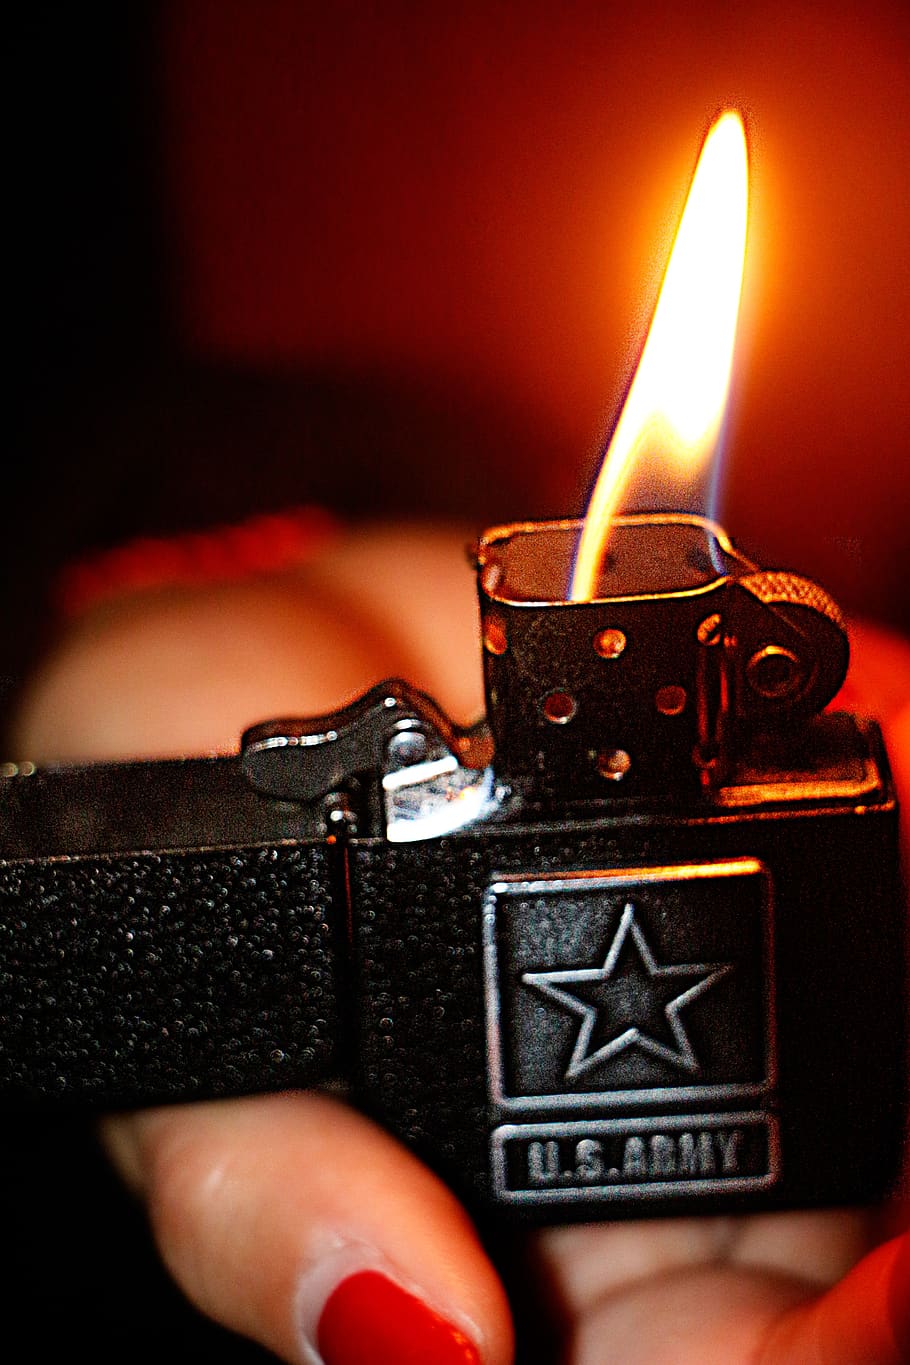 zippo, cigarette lighter, usa, fire, flames, badge, burning, flame, fire - natural phenomenon, close-up